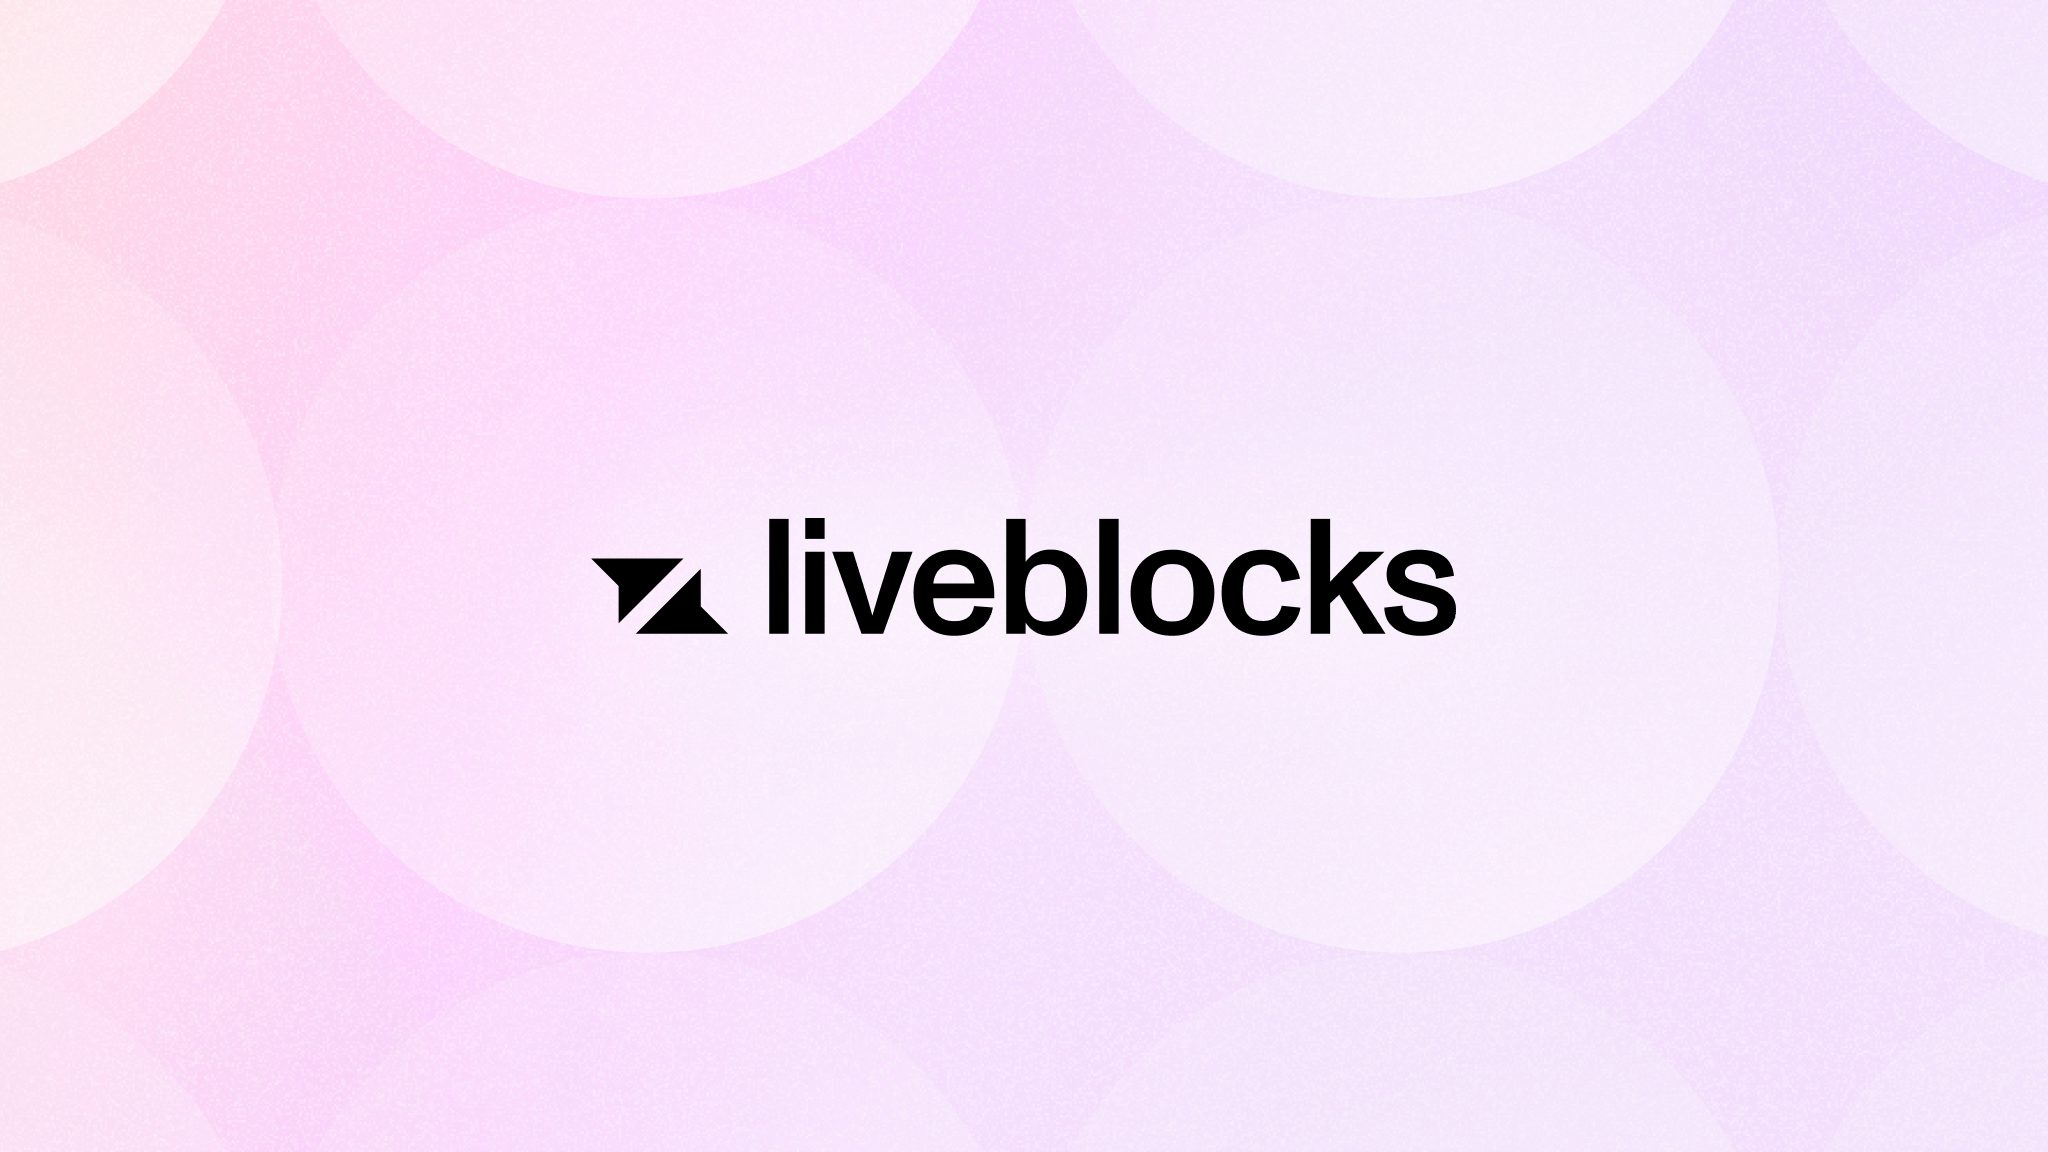 Introducing Liveblocks